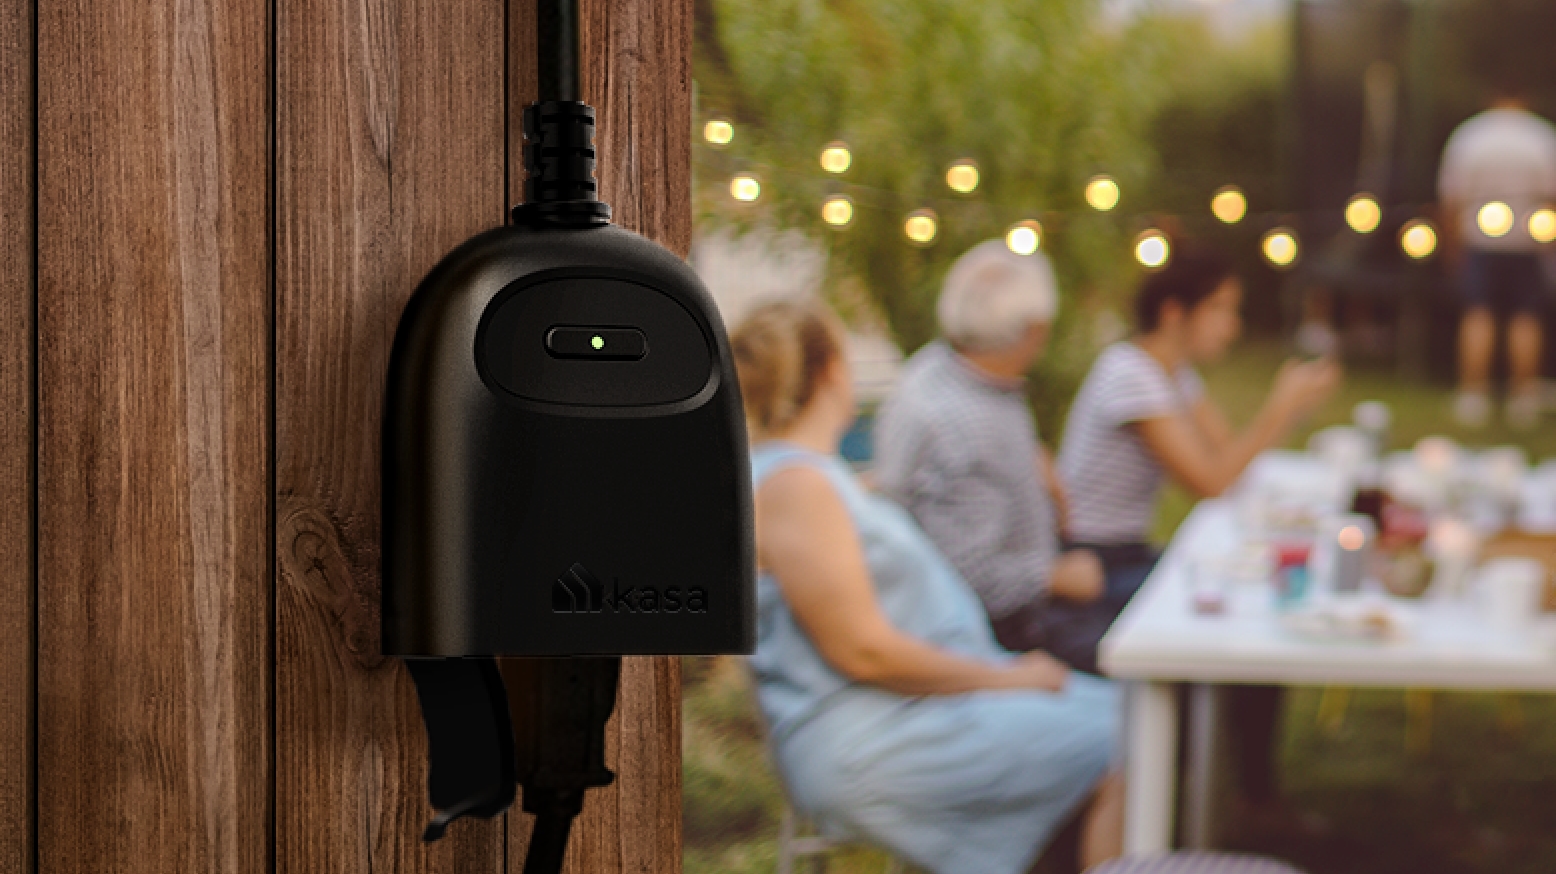 Tplink Kasa Smart Wifi Plug Outdoor Kp401 in an outdoor setting